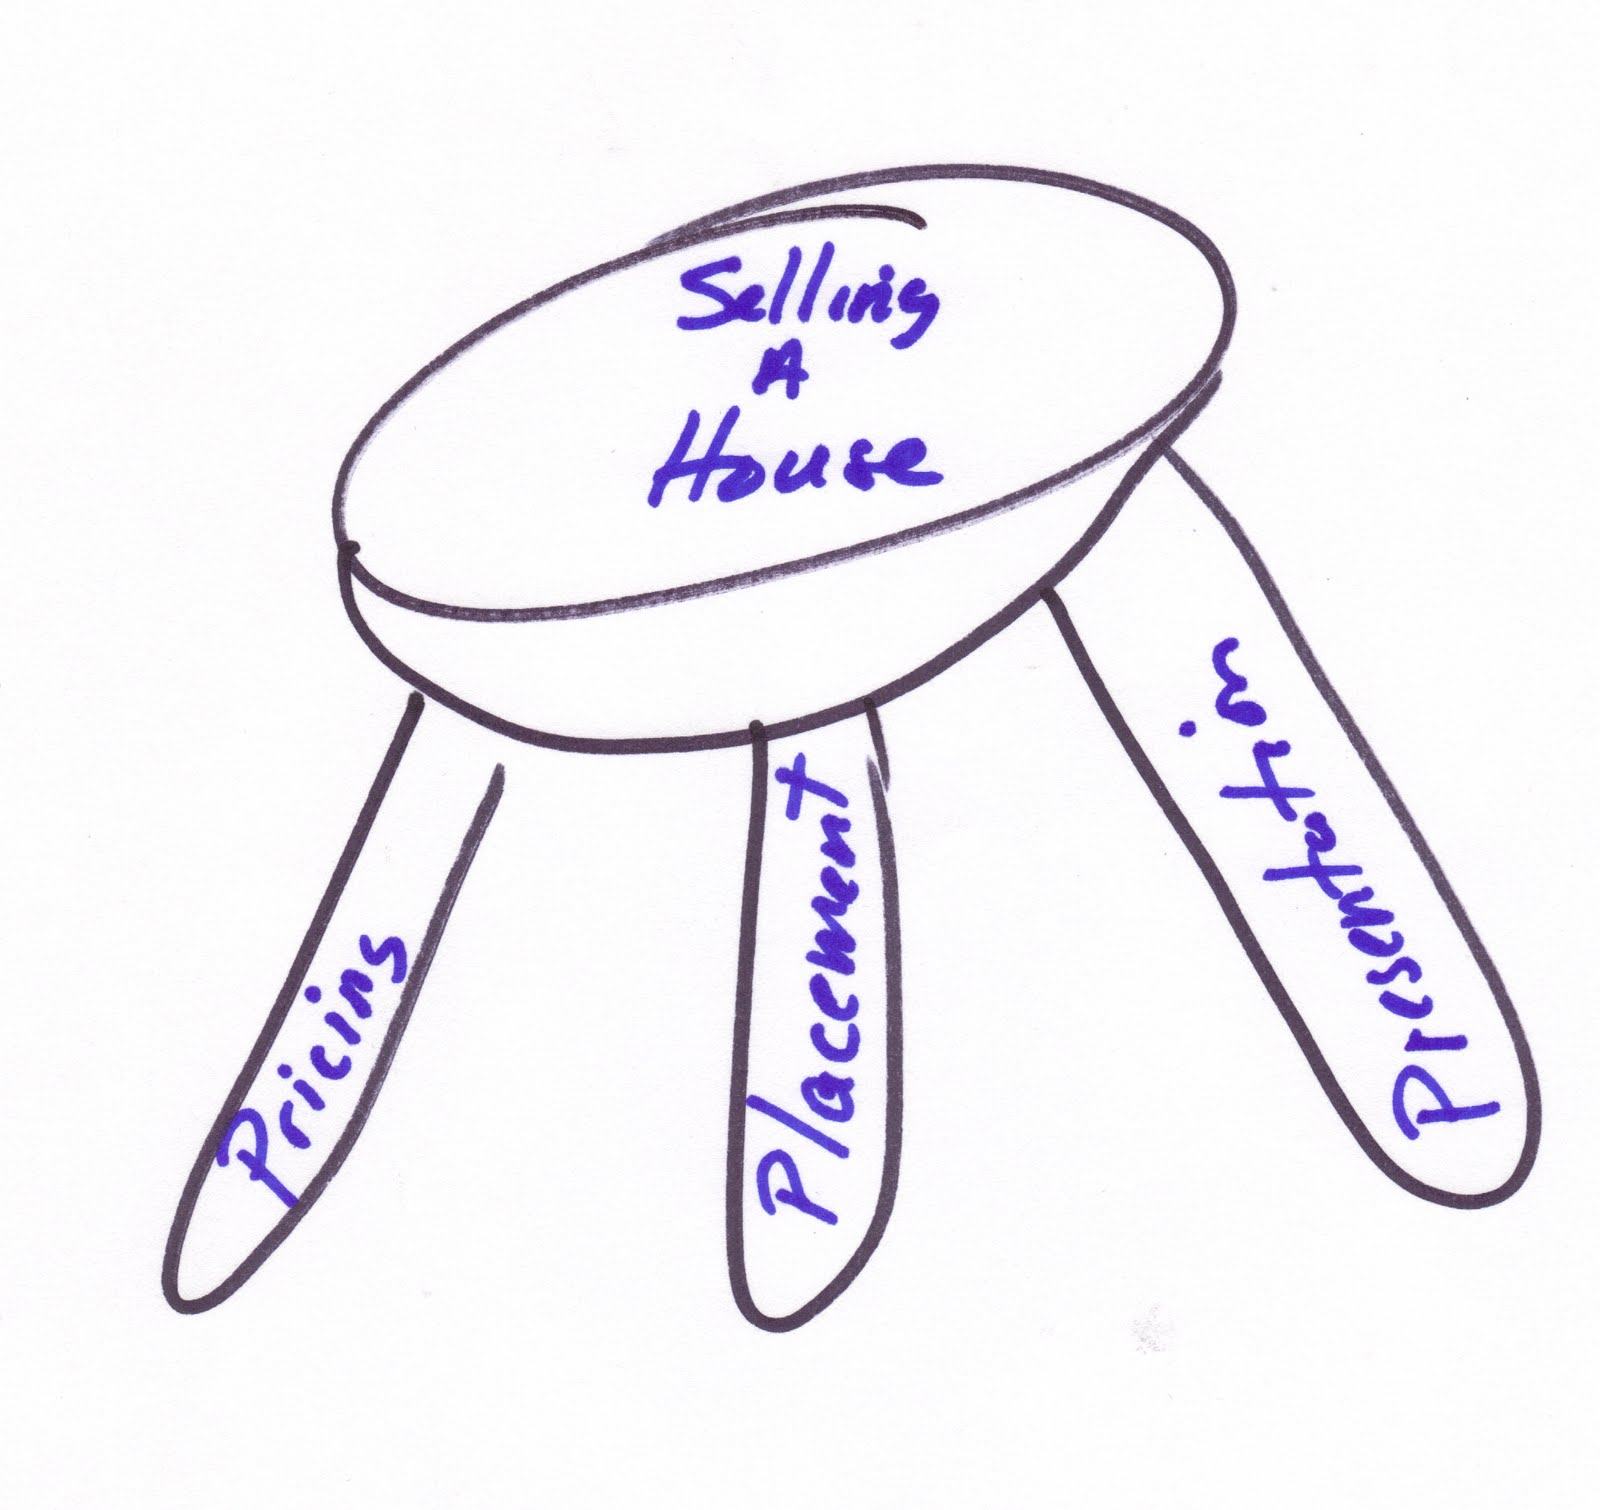 Florida Homes For Sale - Melbourne, Viera, Rockledge, Suntree: 7/1 ...